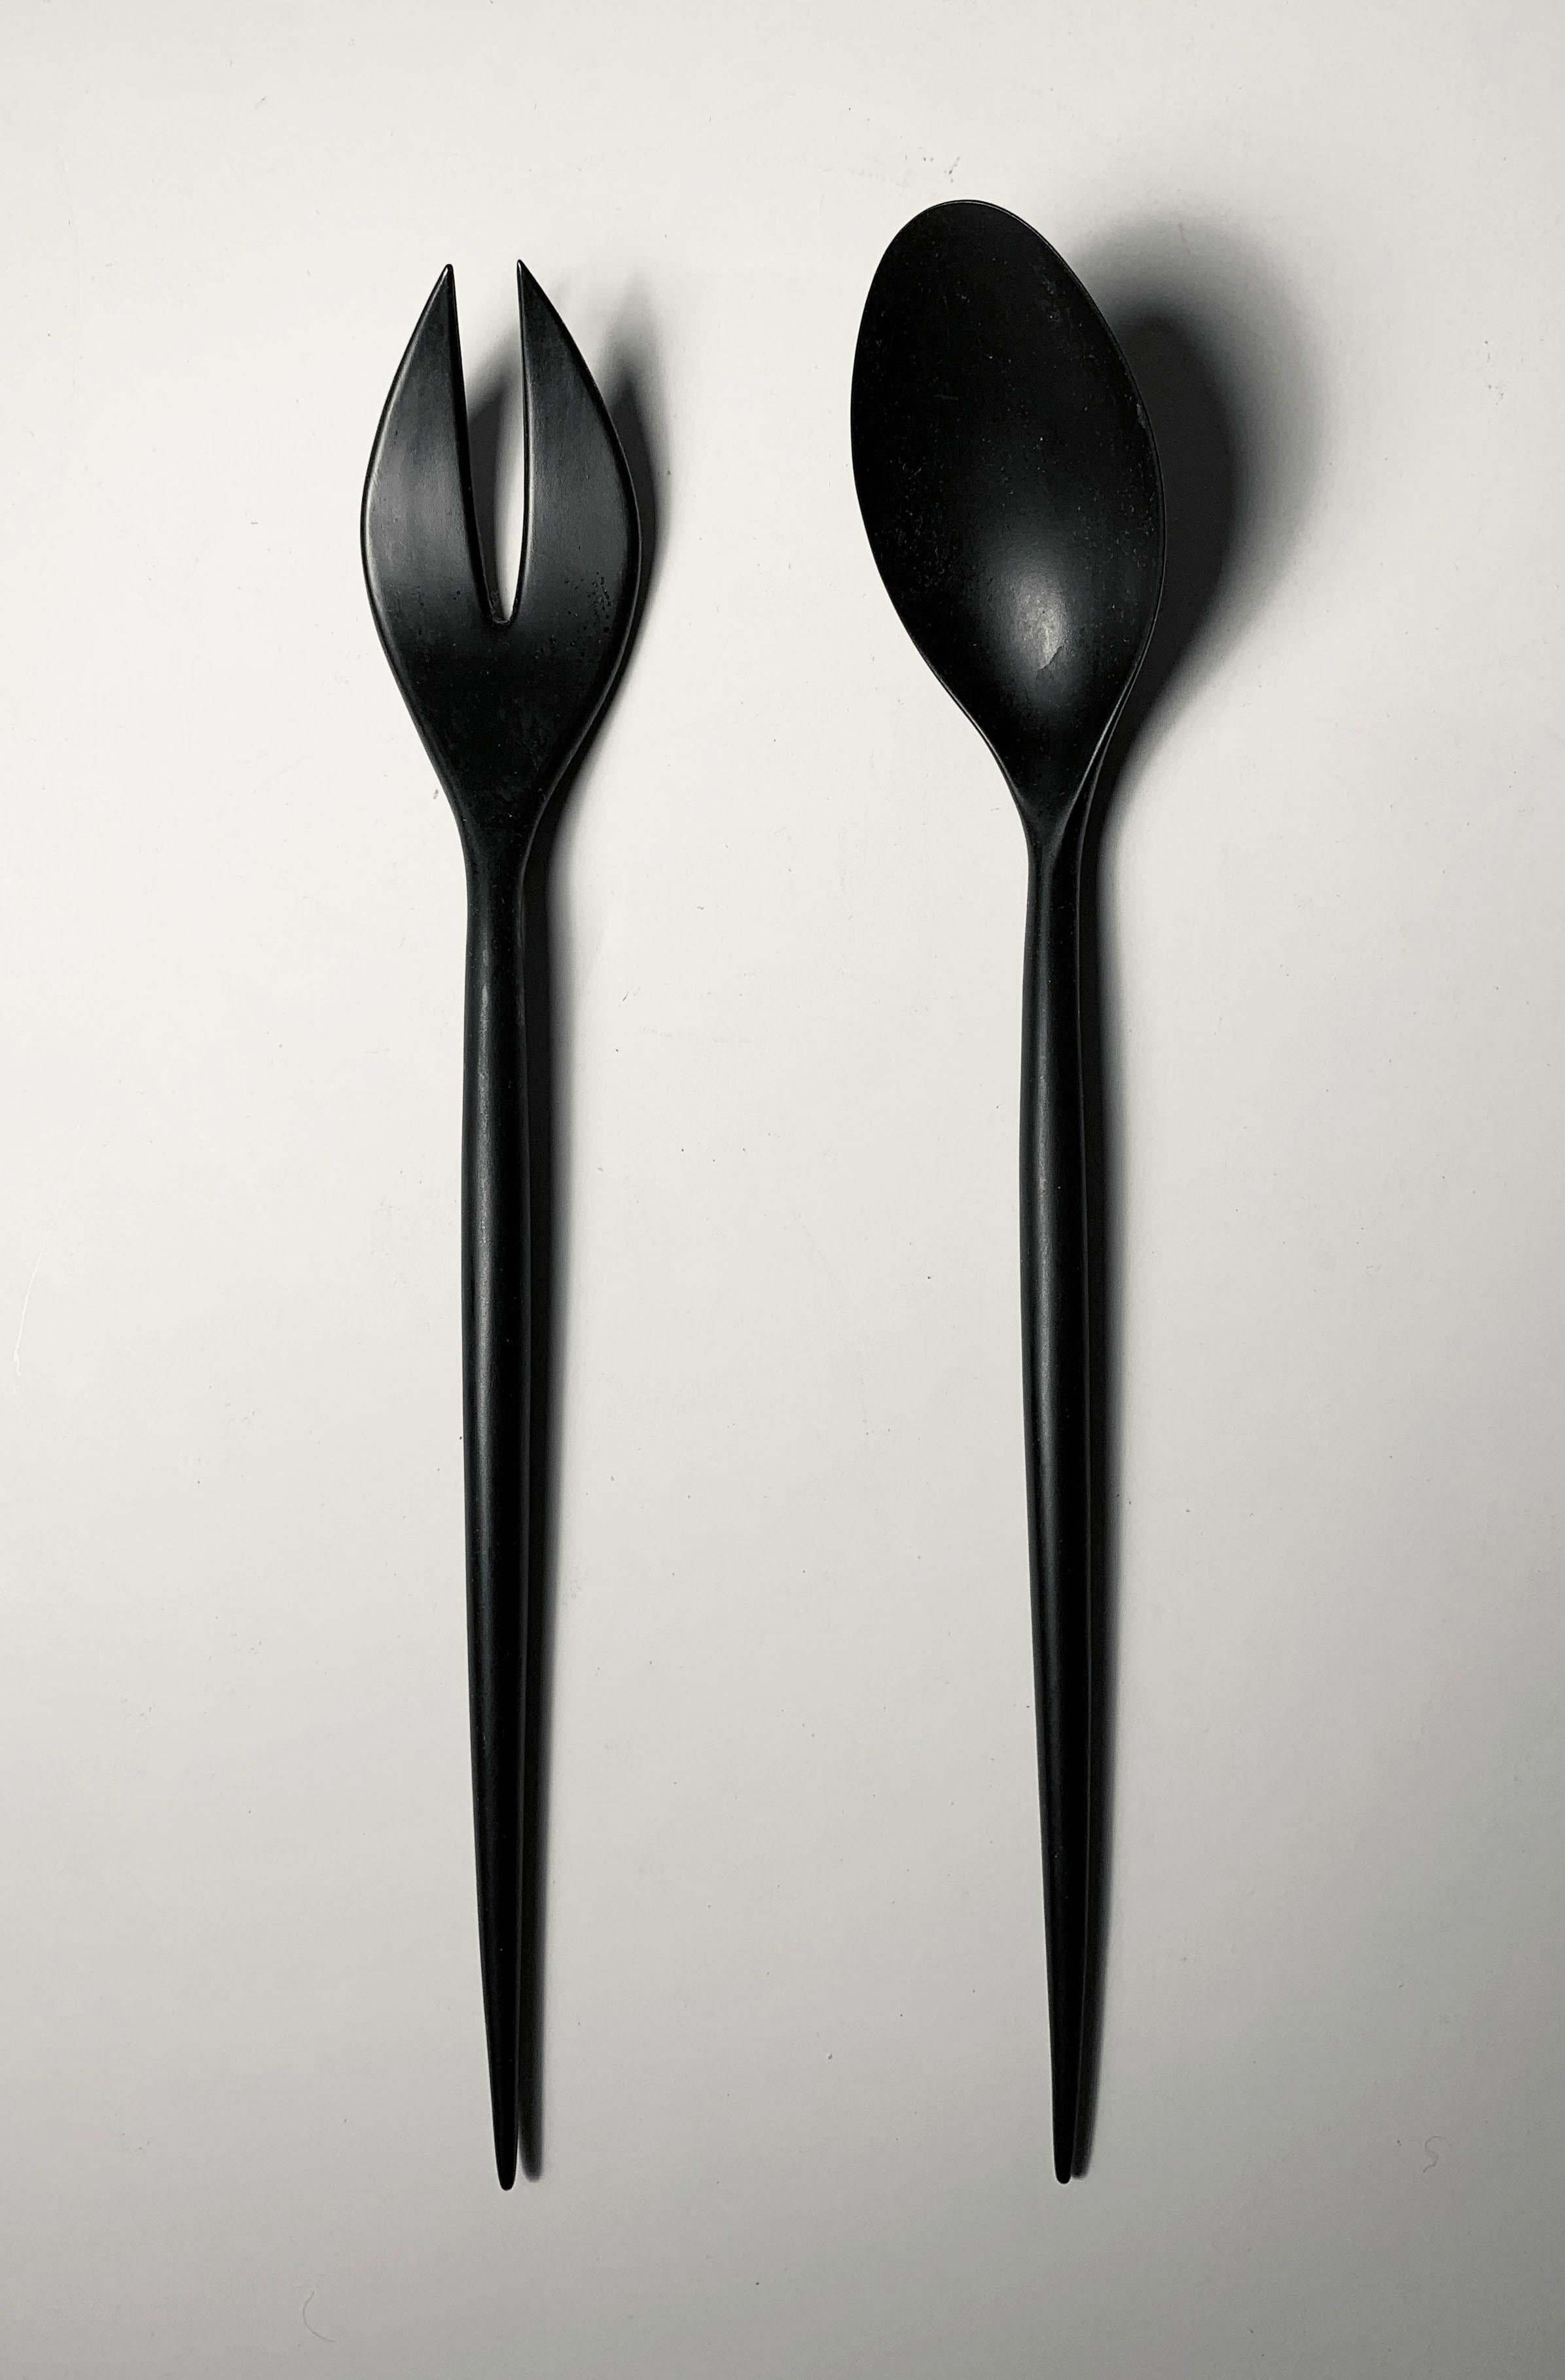 Pair of vintage server salad utensils by Herbert Krenchel

dims are of the spoon.